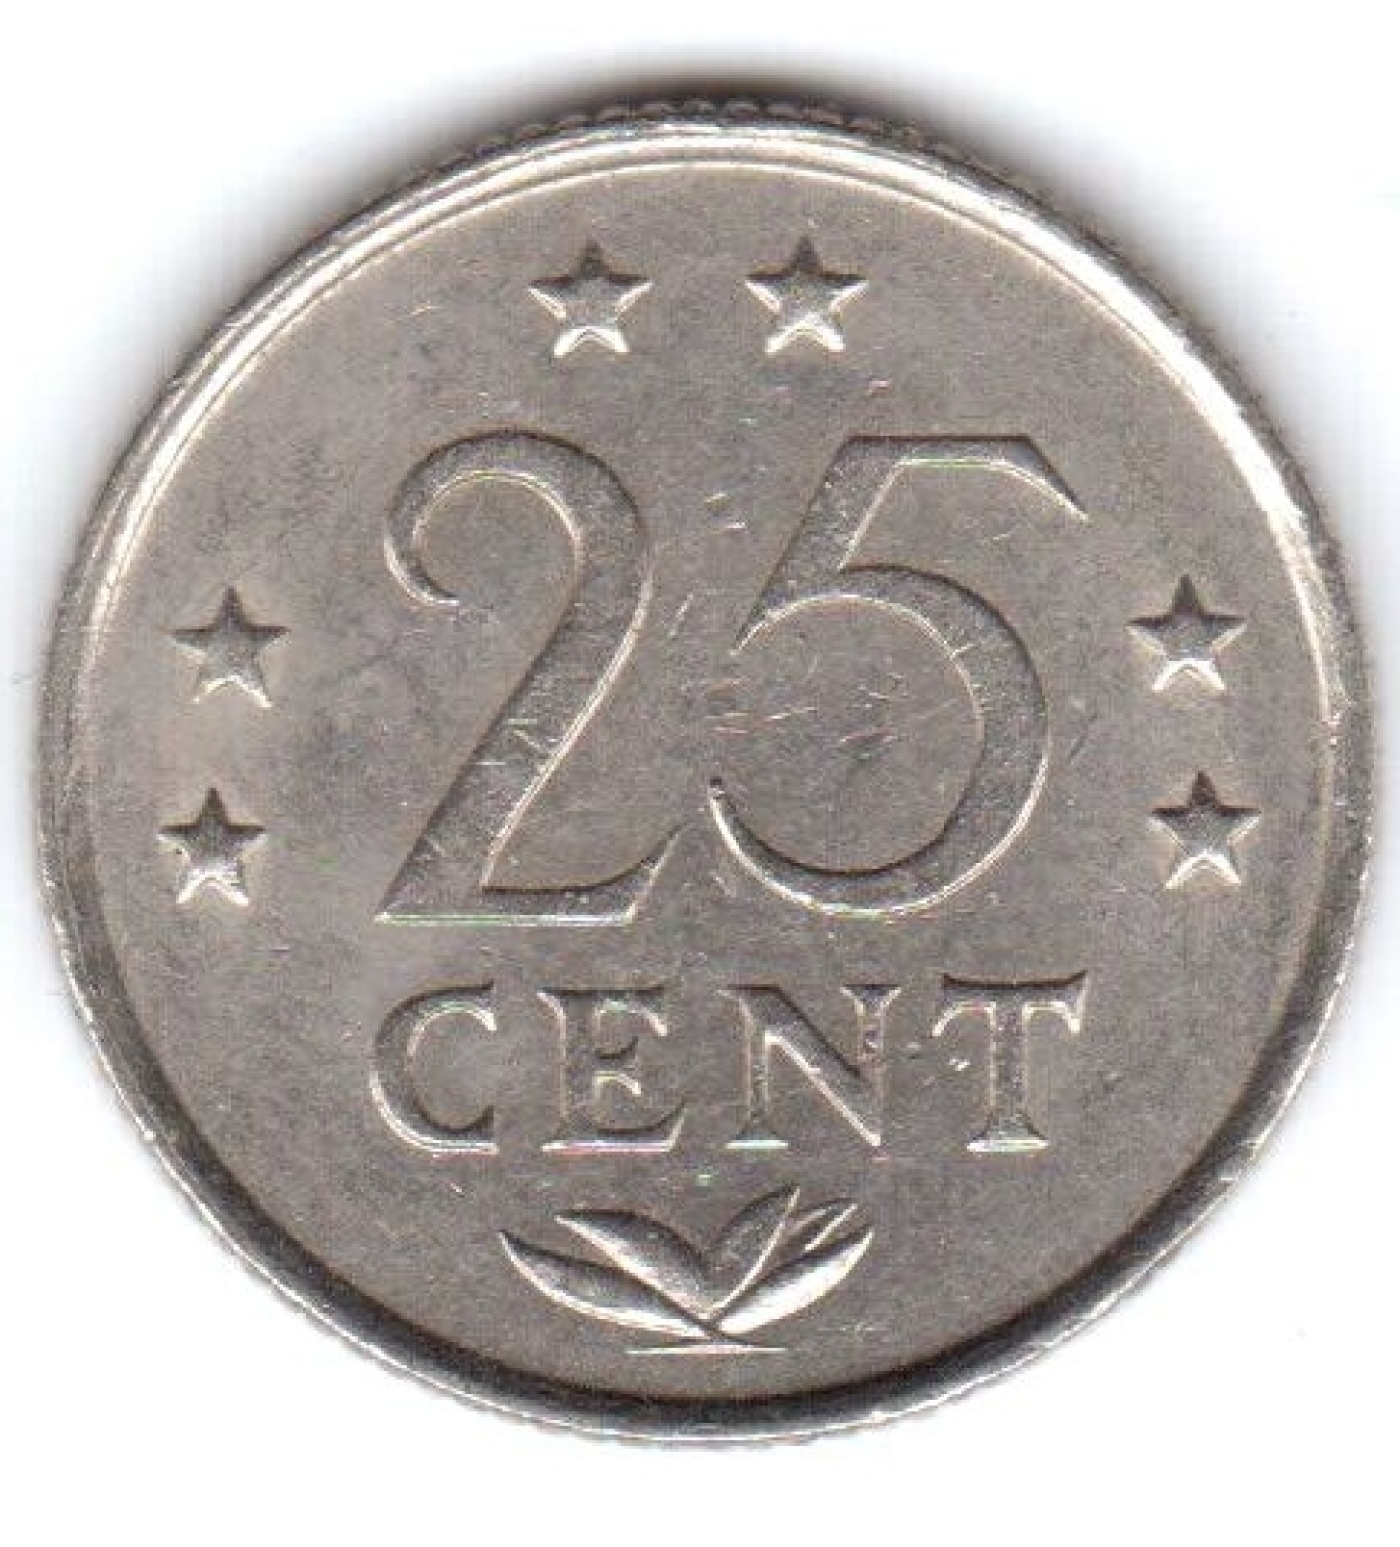 Netherlands Antilles 1981 2 1//2 Cents lot of 25 BU coins #9